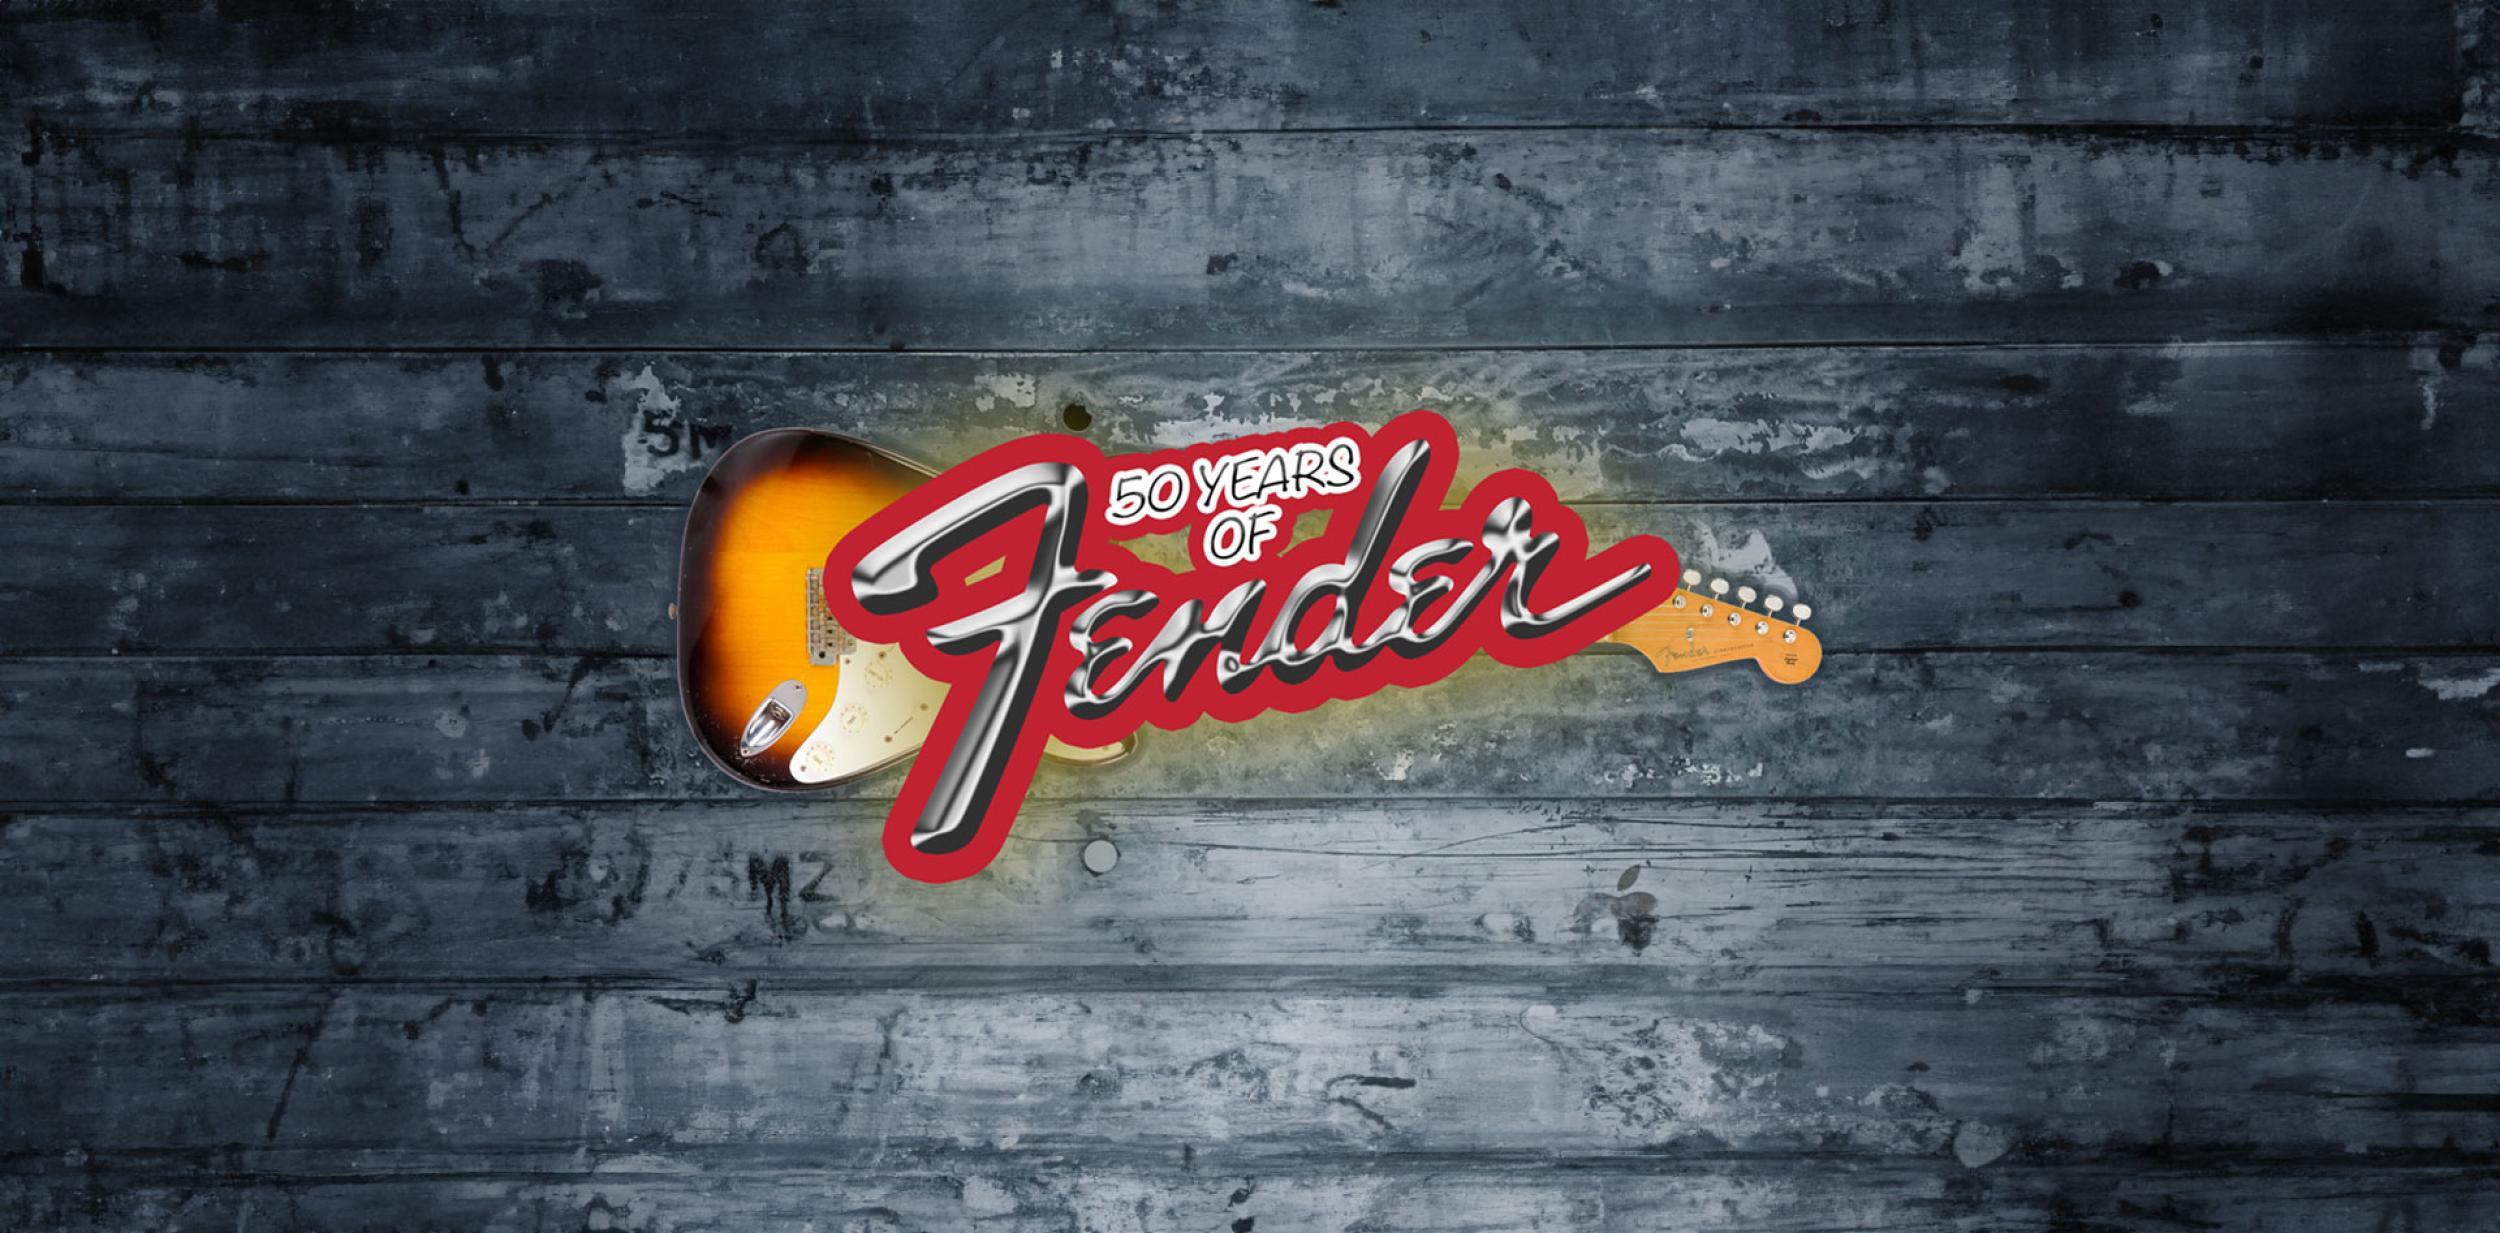 50 Years of Fender logo